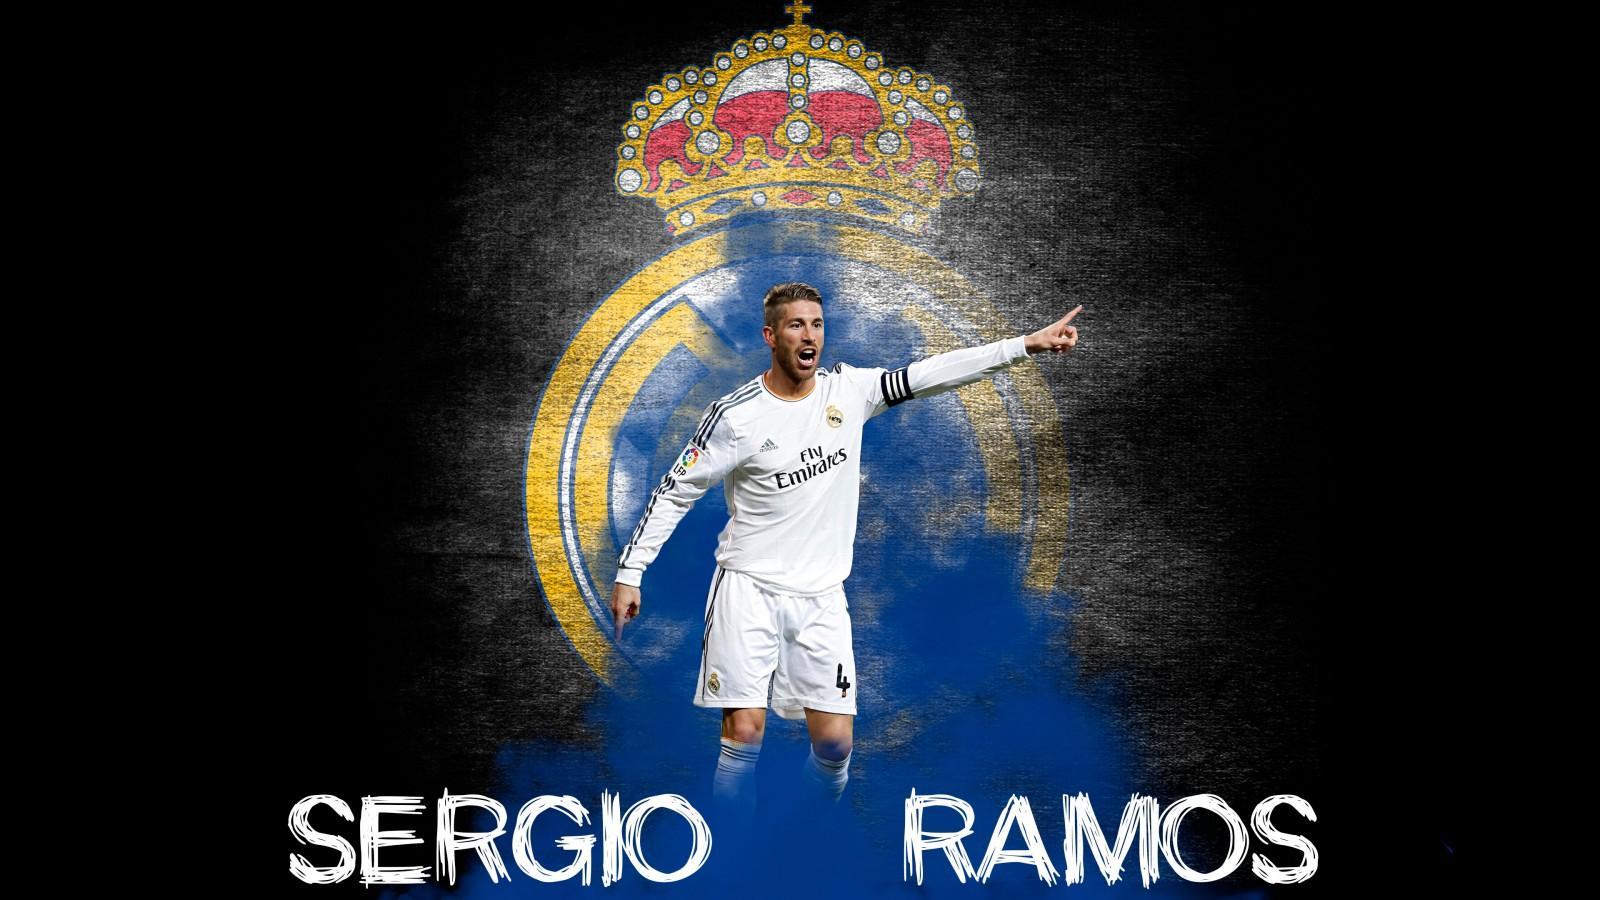 Sergio Ramos photo and wallpaper 2018